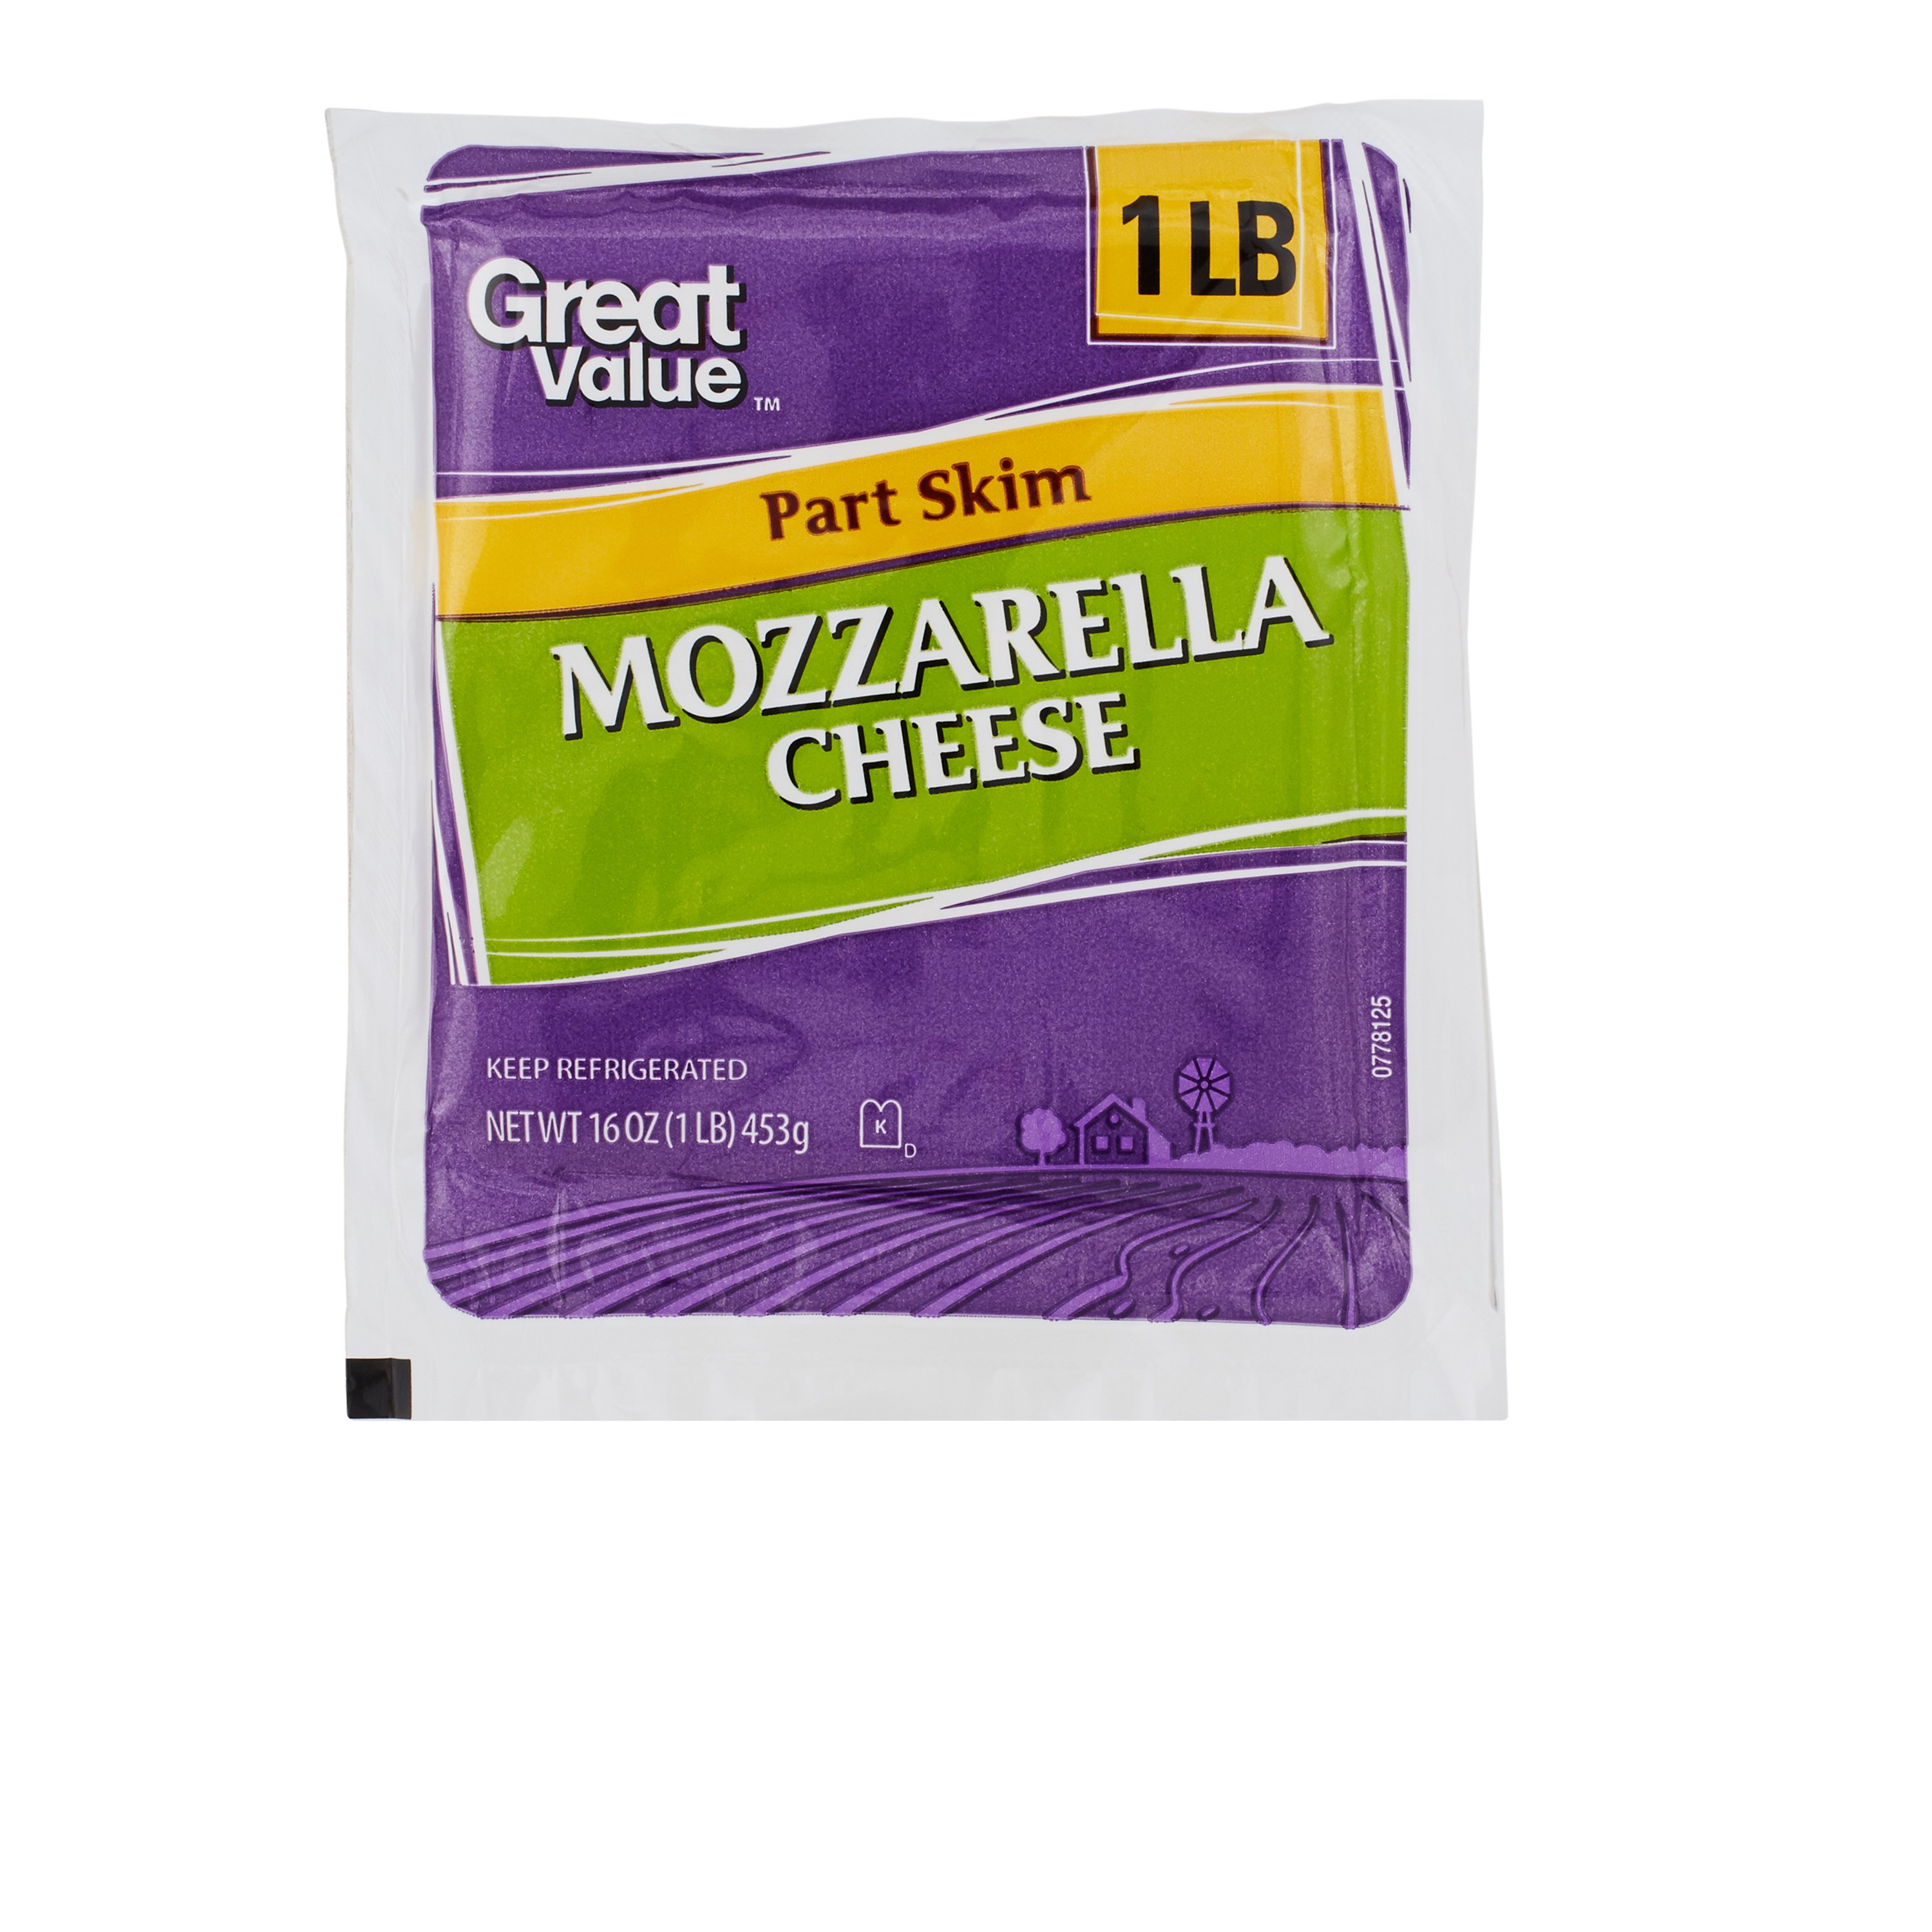 Great Value Part Skim Mozzarella Cheese, 1 Lb Image